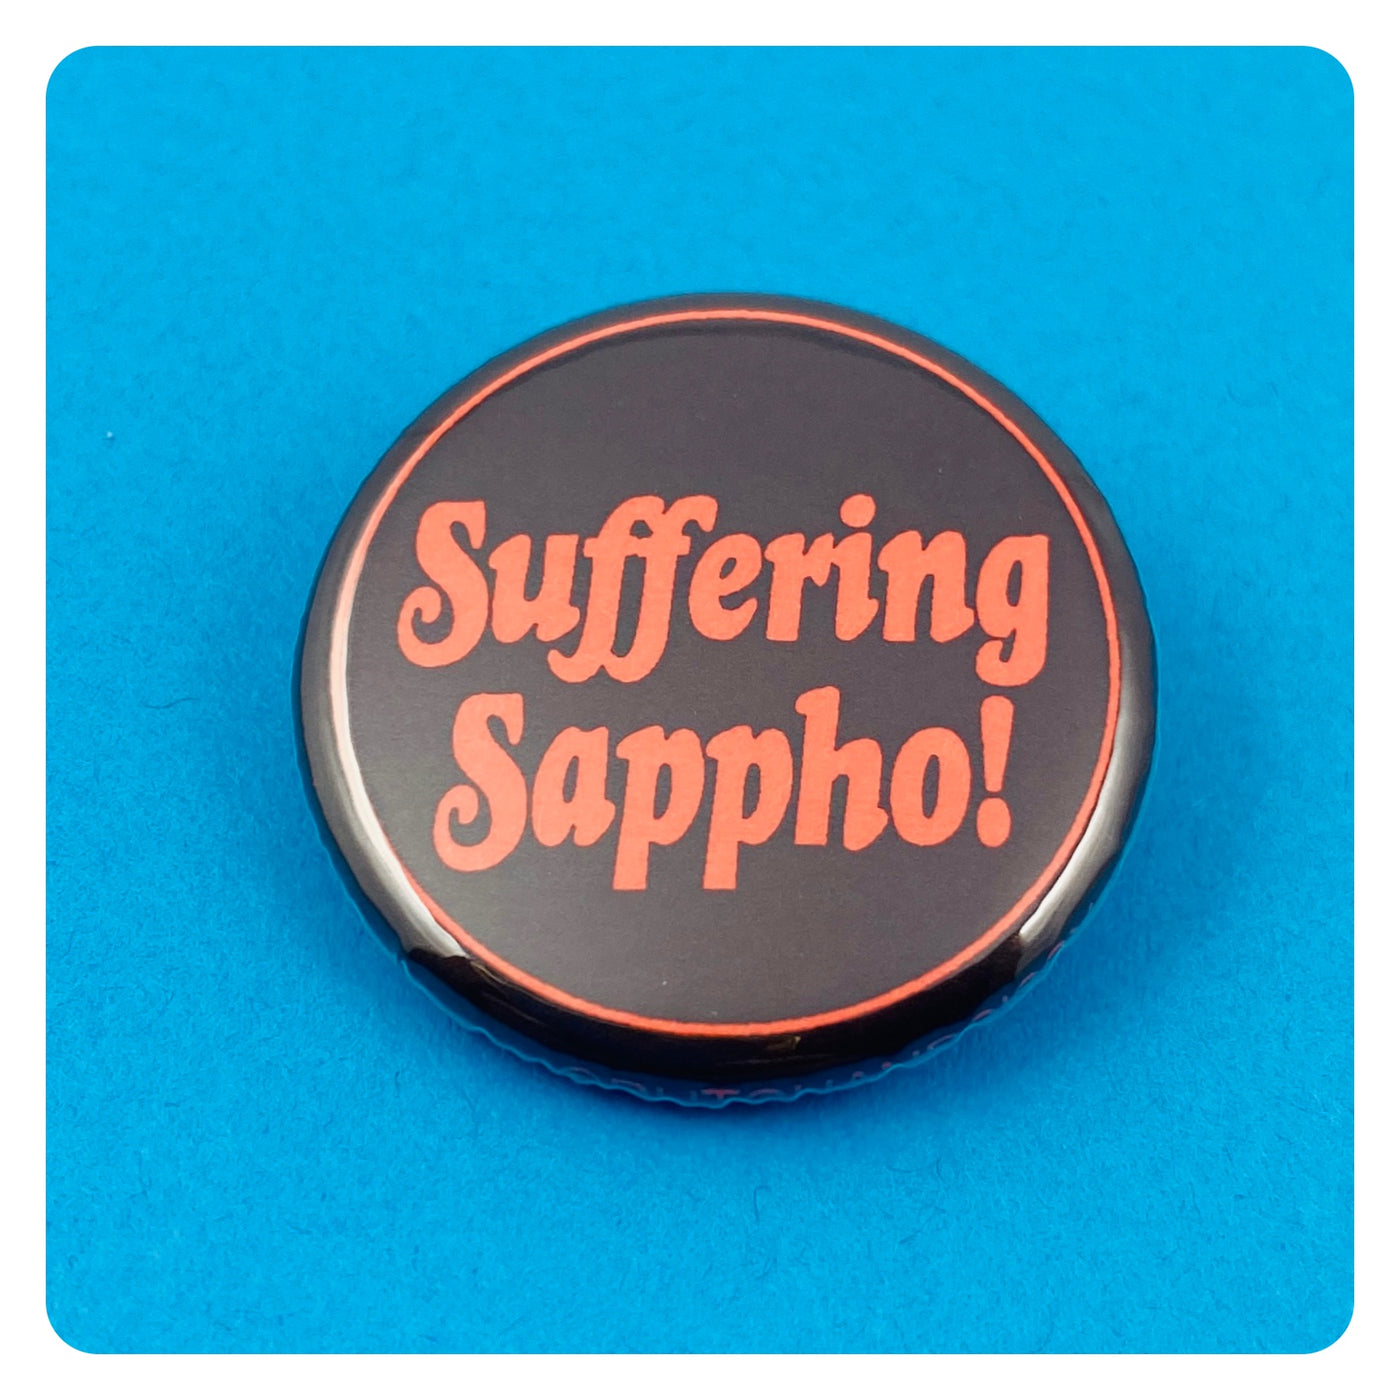 Suffering Sappho Button